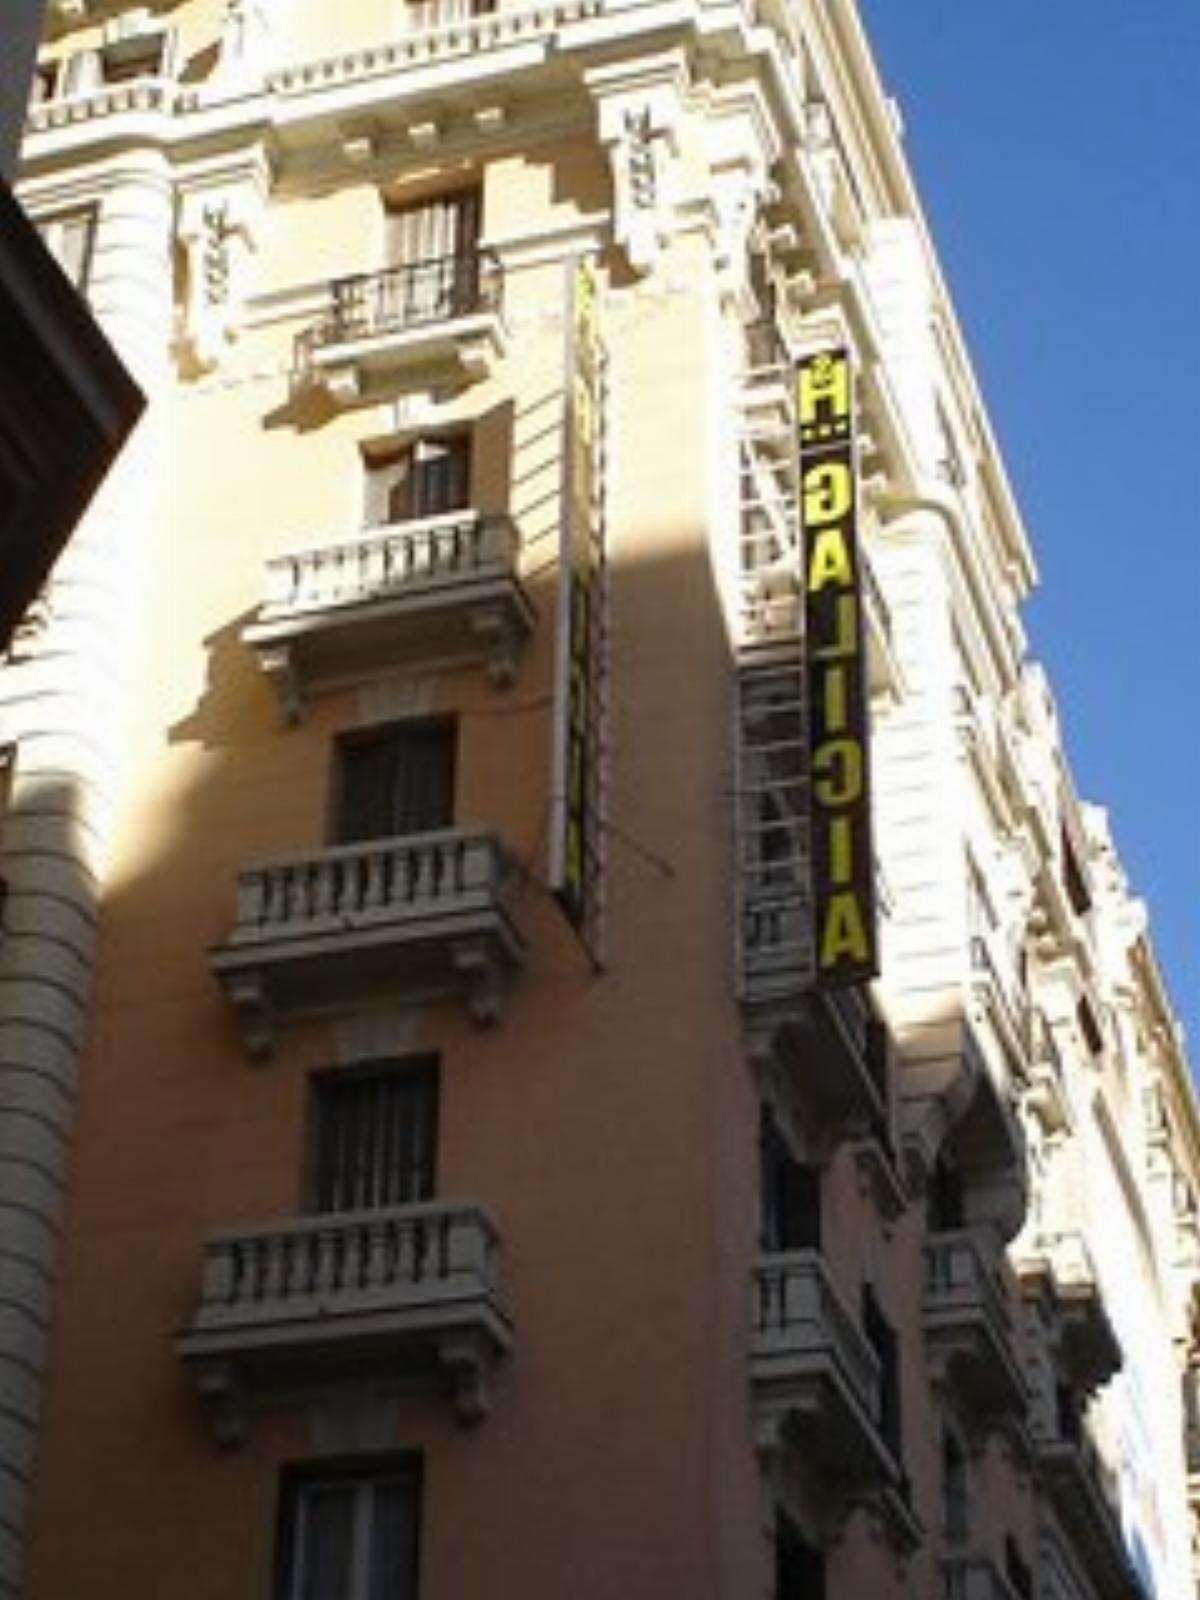 Hostal Galicia Hotel Madrid Spain